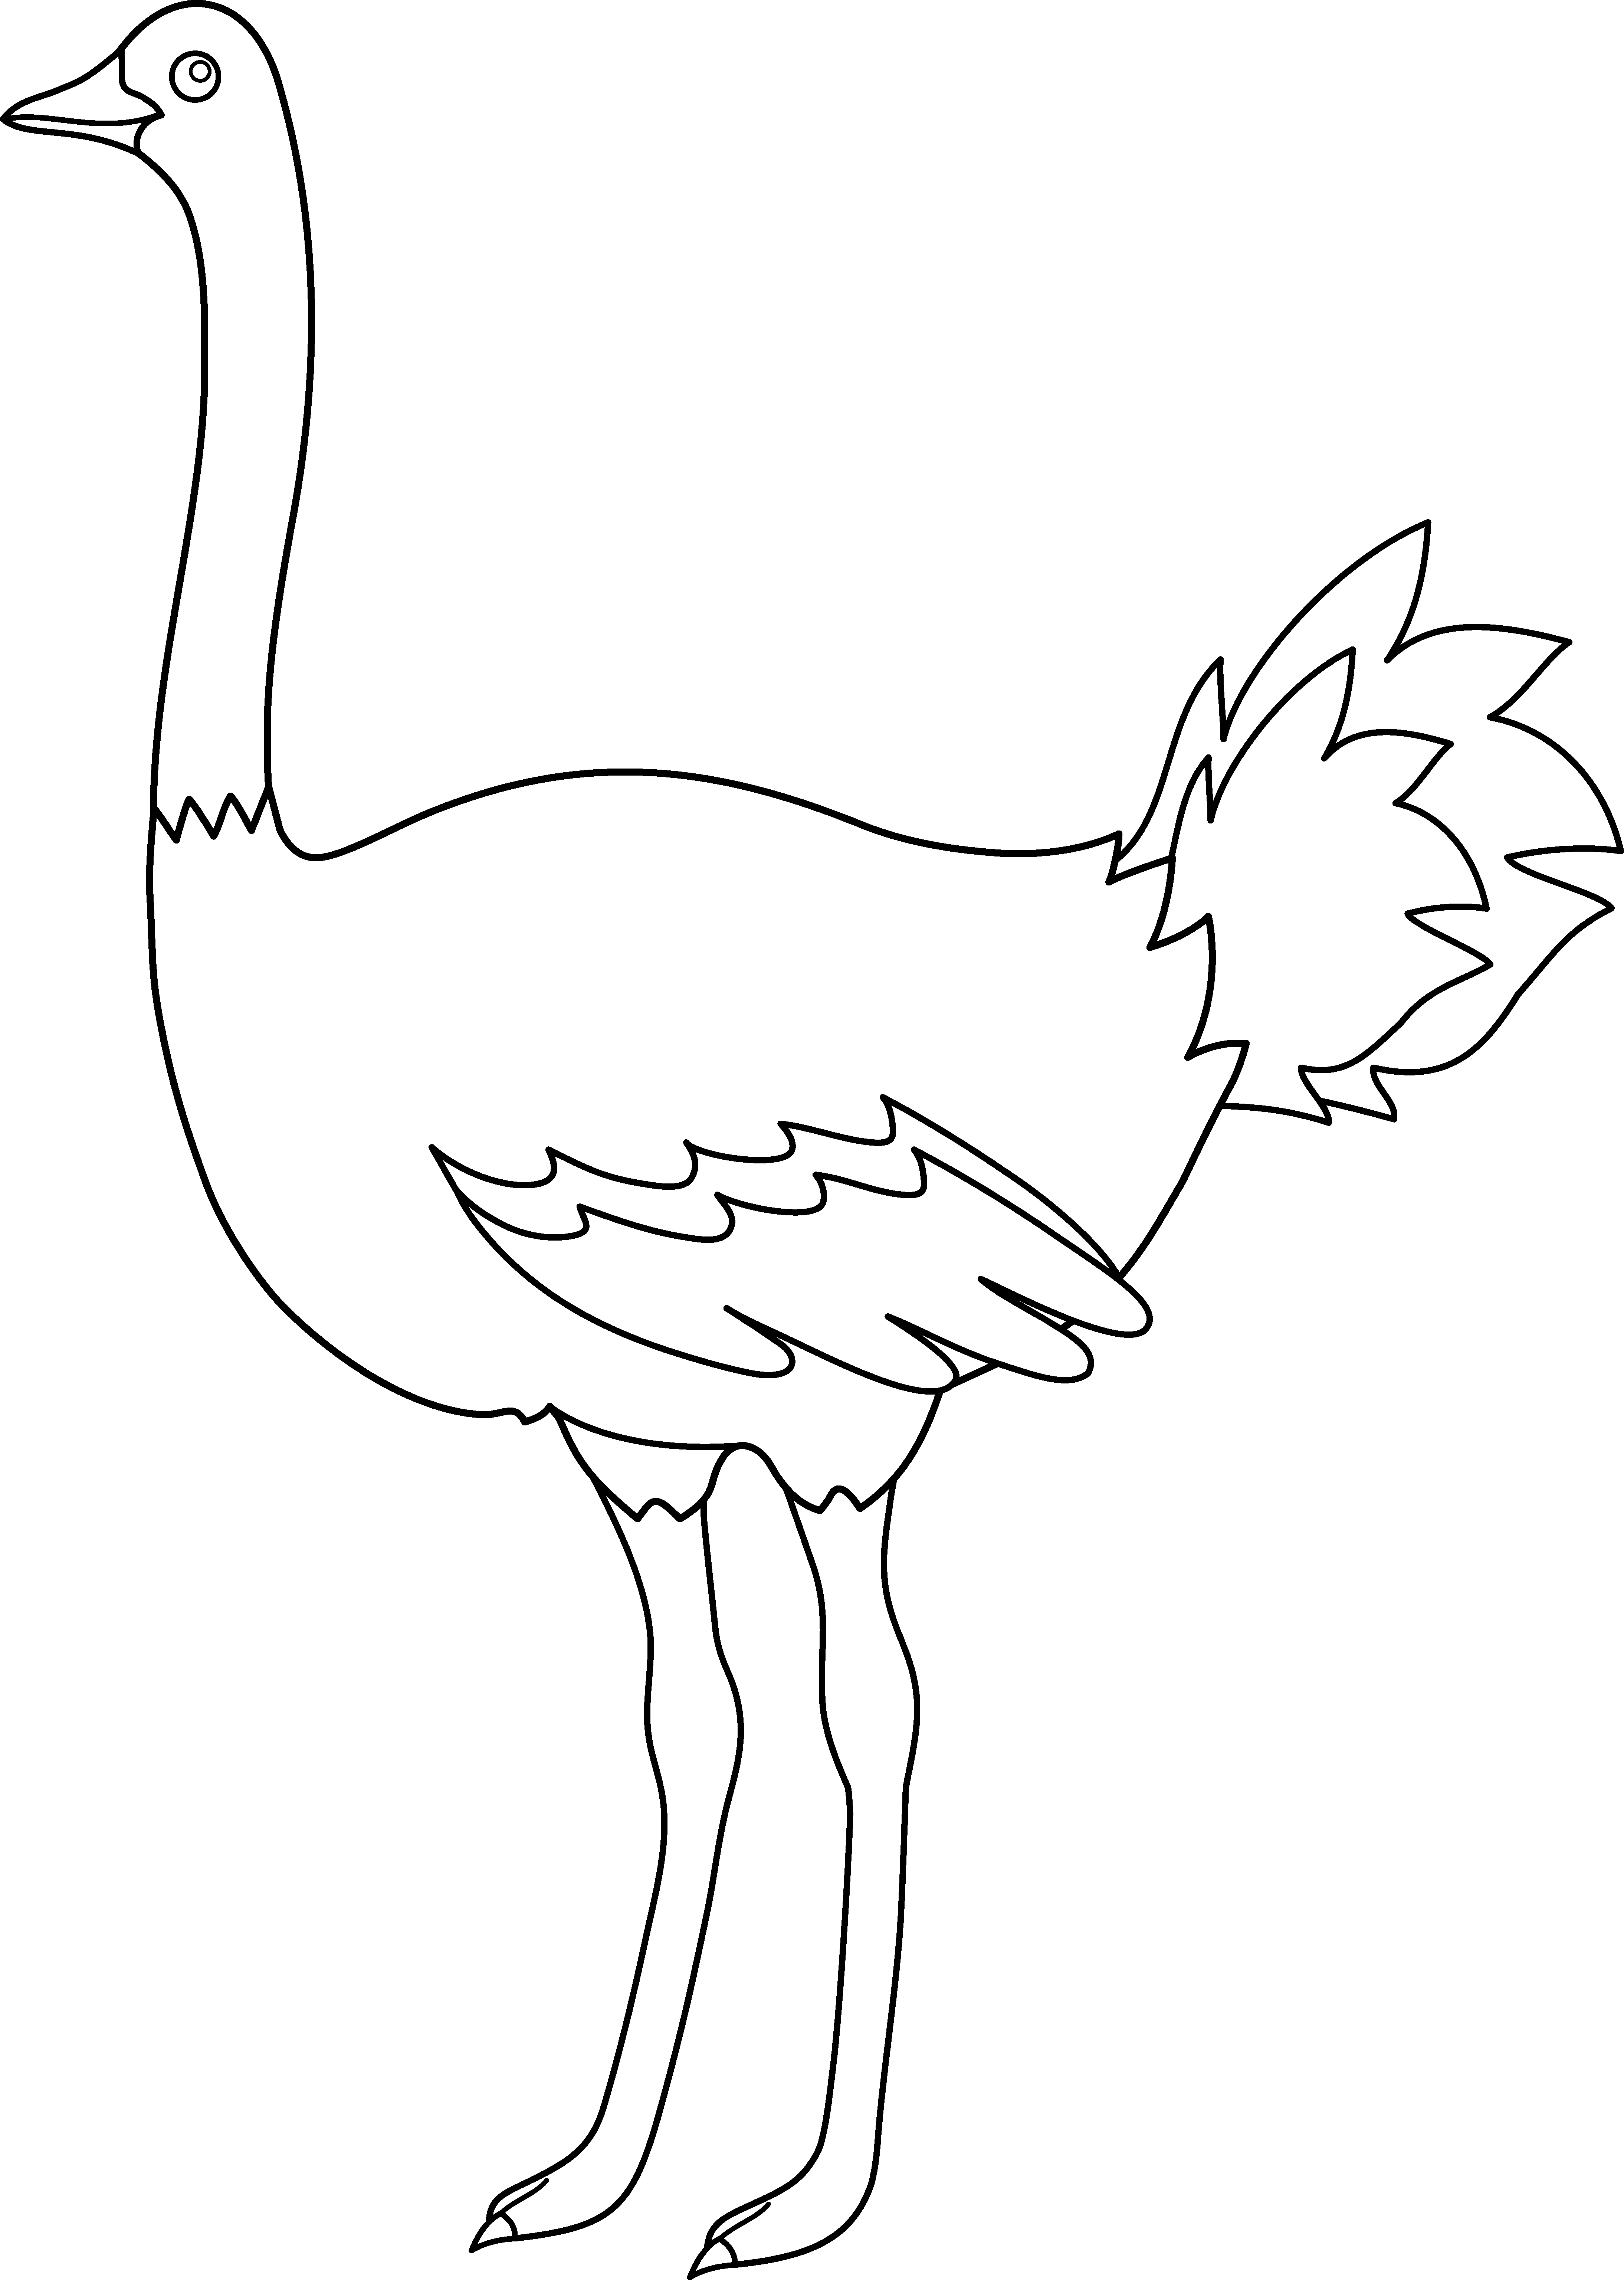 Ostrich clipart vector. Colorable design free clip